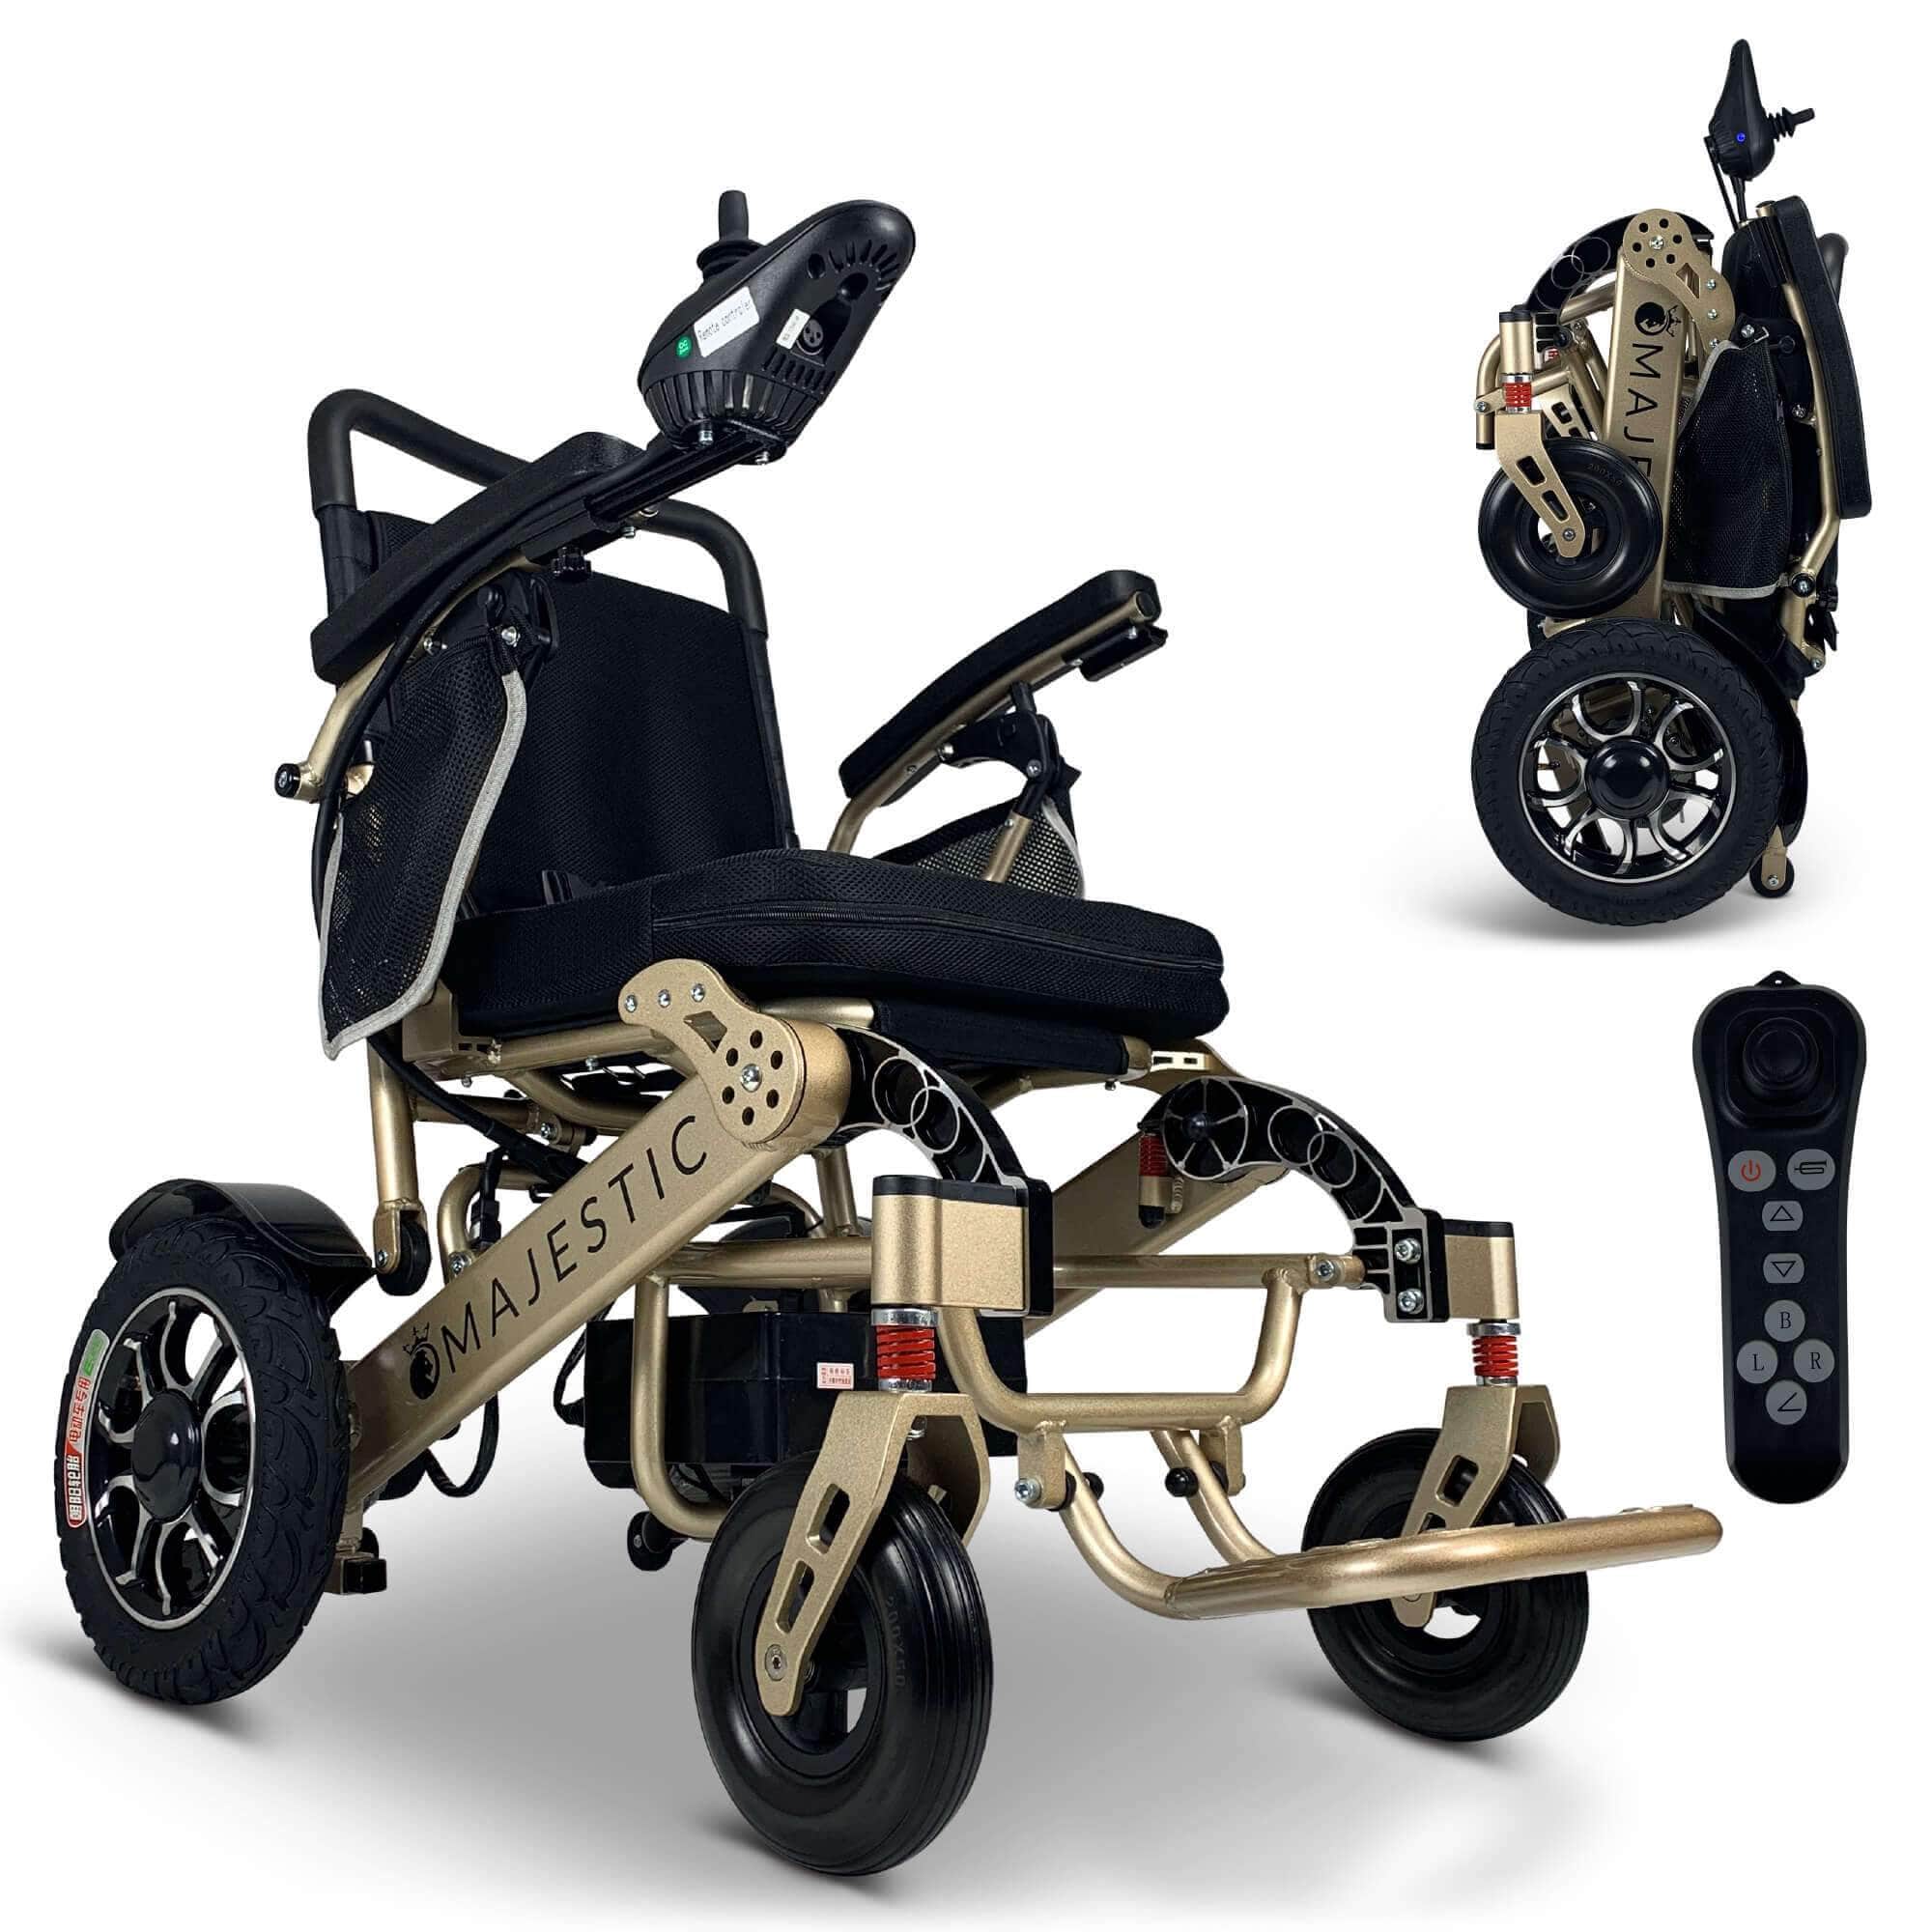 ComfyGo Majestic IQ-1700 12Ah 250W Manual Folding Electric Wheelchair